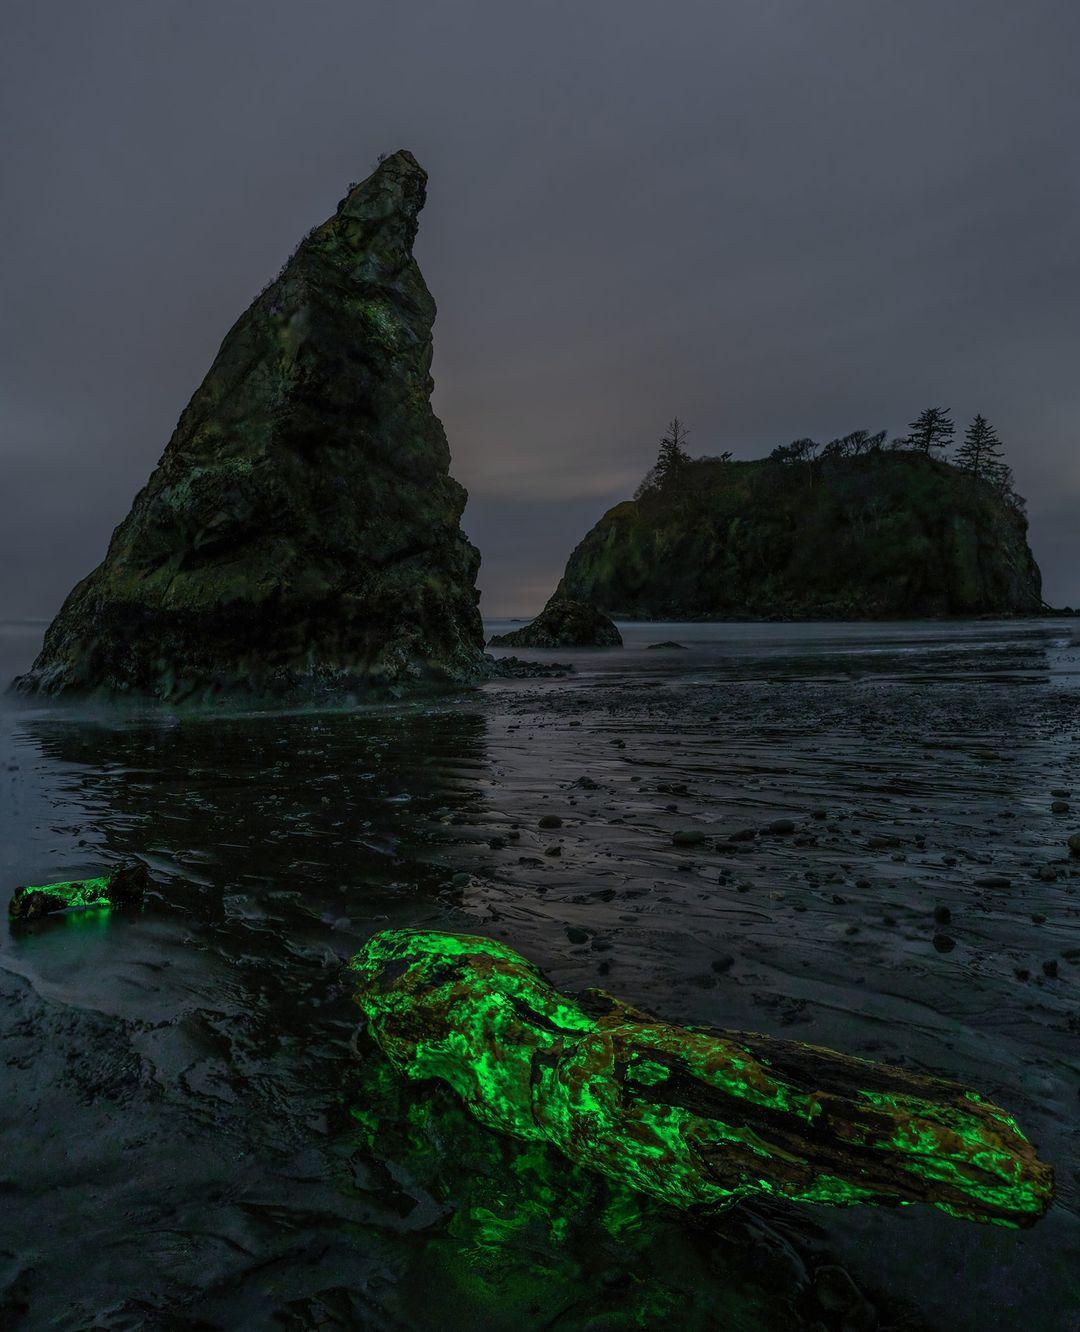 The green bioluminescent fungus glowing on Ruby Beach, Washington. (Courtesy of <a href="https://www.facebook.com/CAMITOLYMPICMEDIA/">Mathew Nichols Photography</a>)